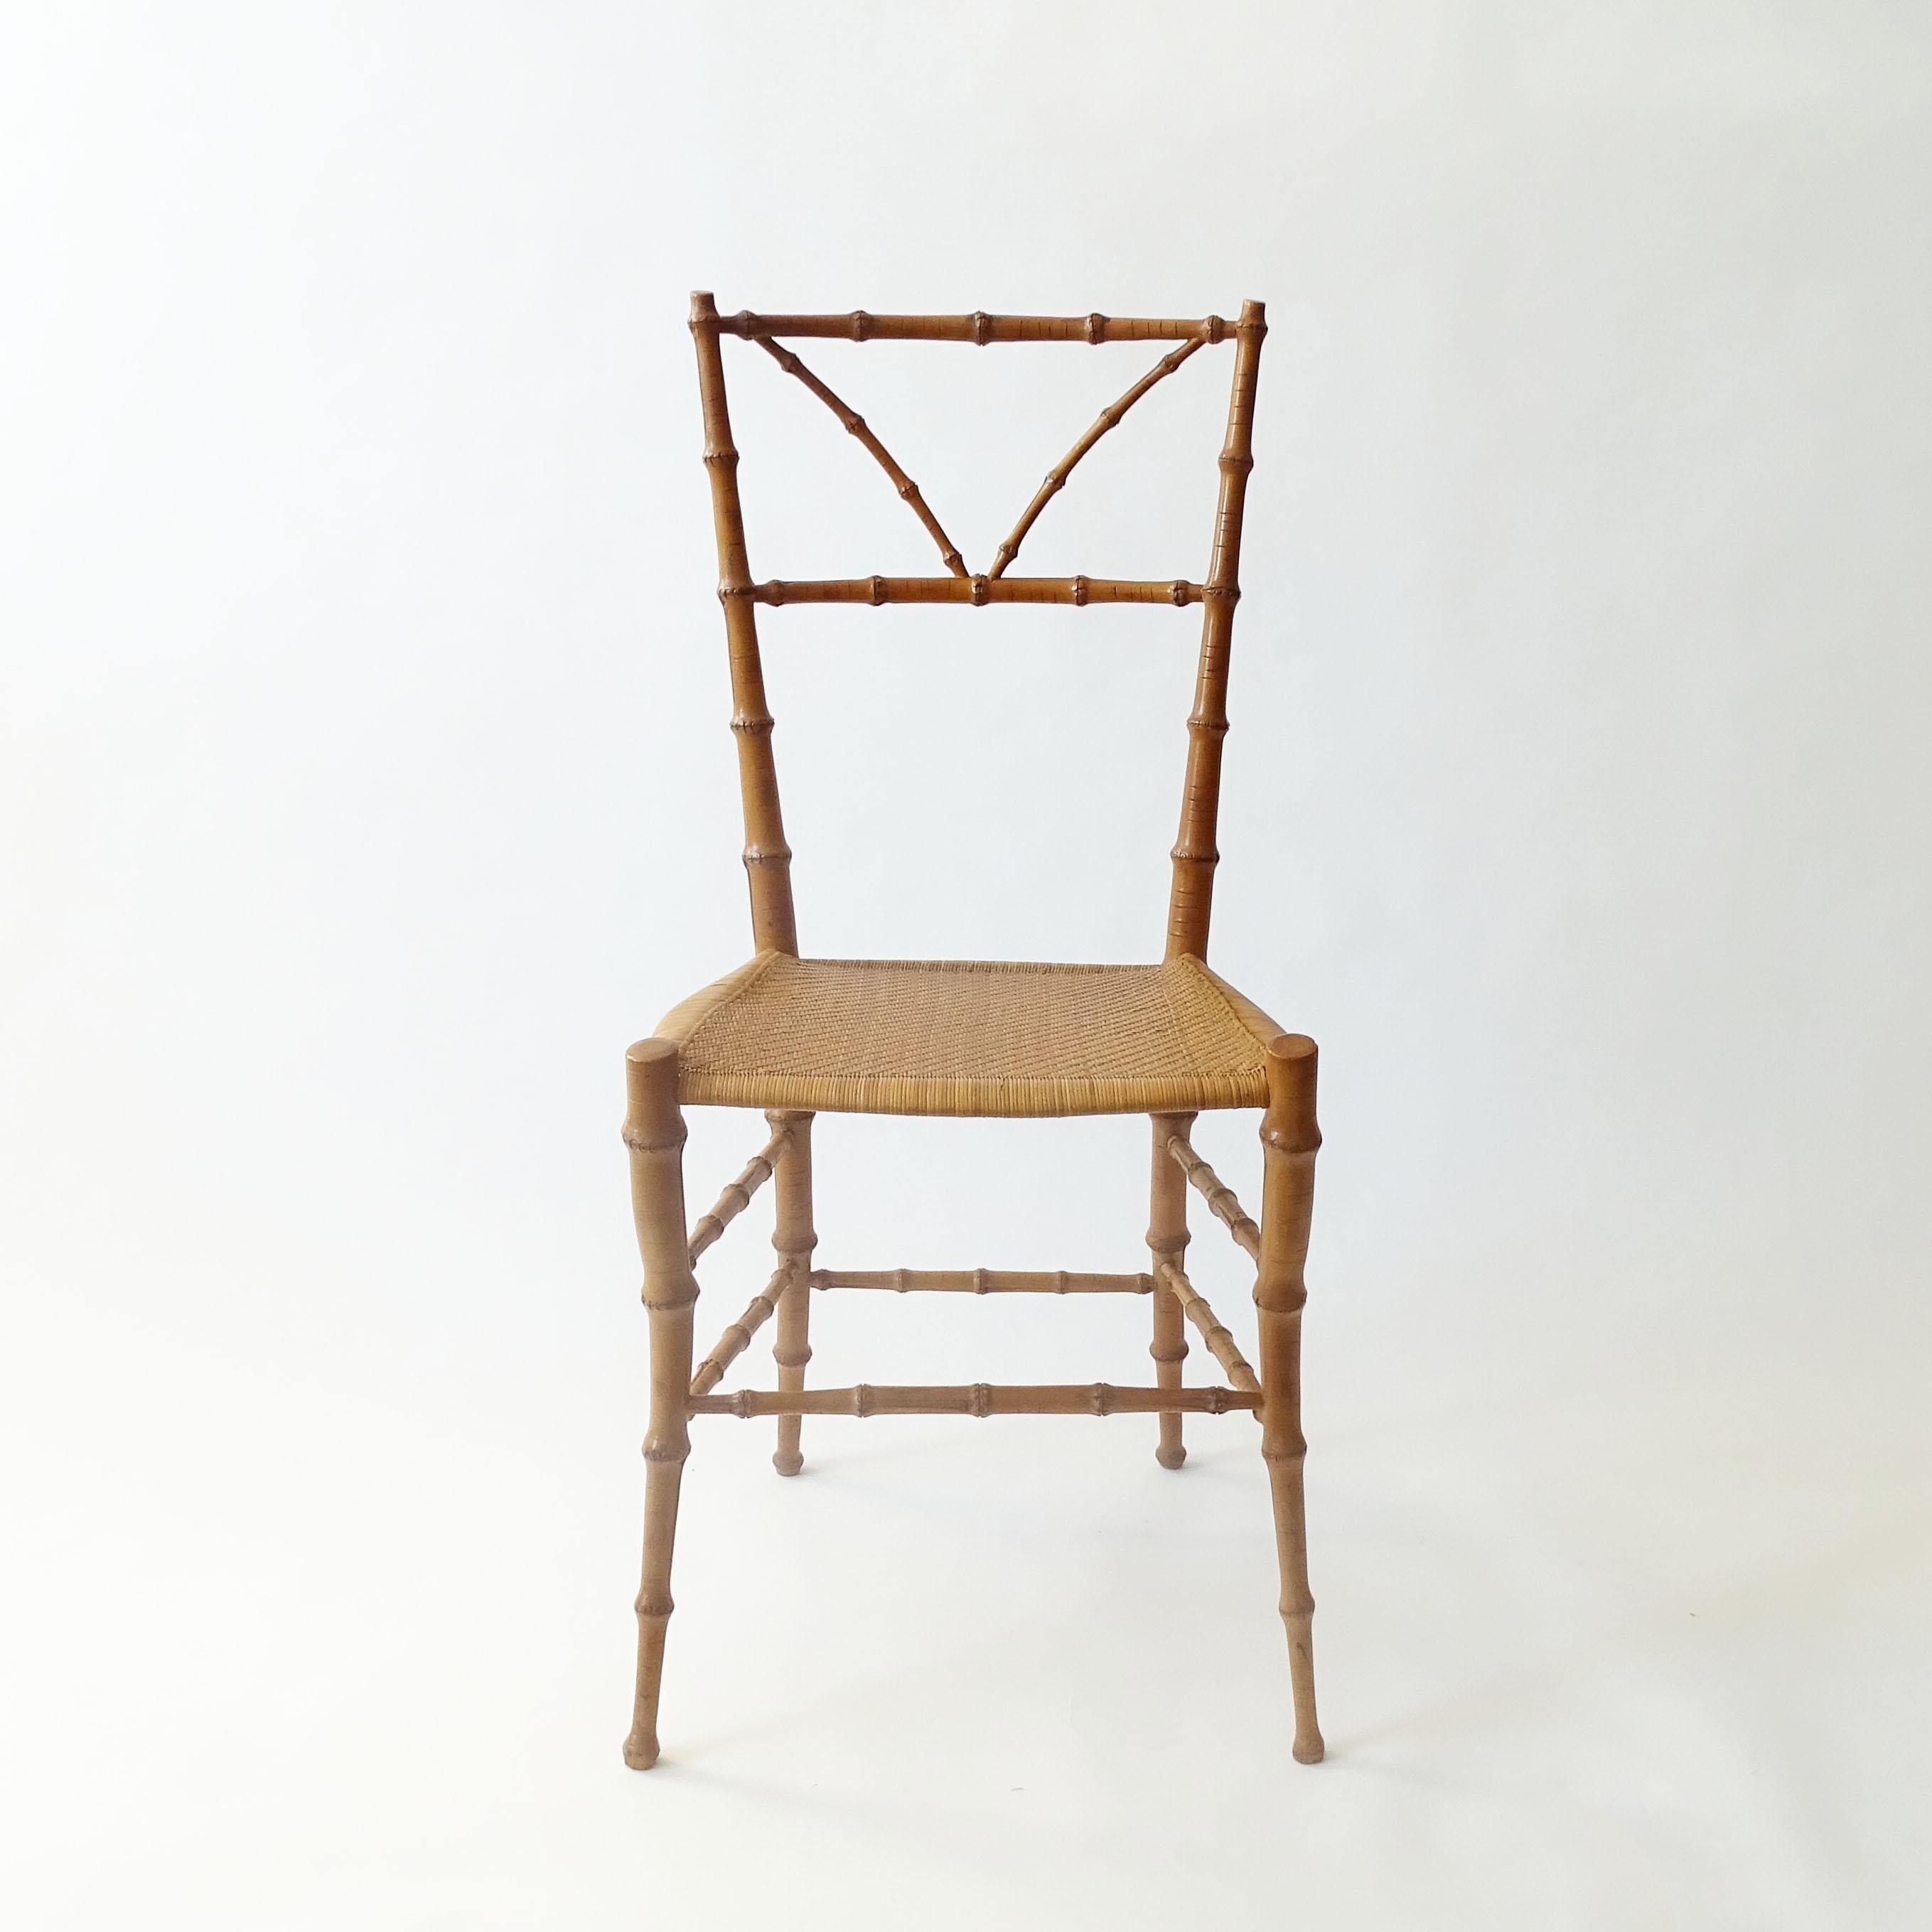 Splendid single faux-bamboo and wicker Chiavarina chair, Italy 1950s